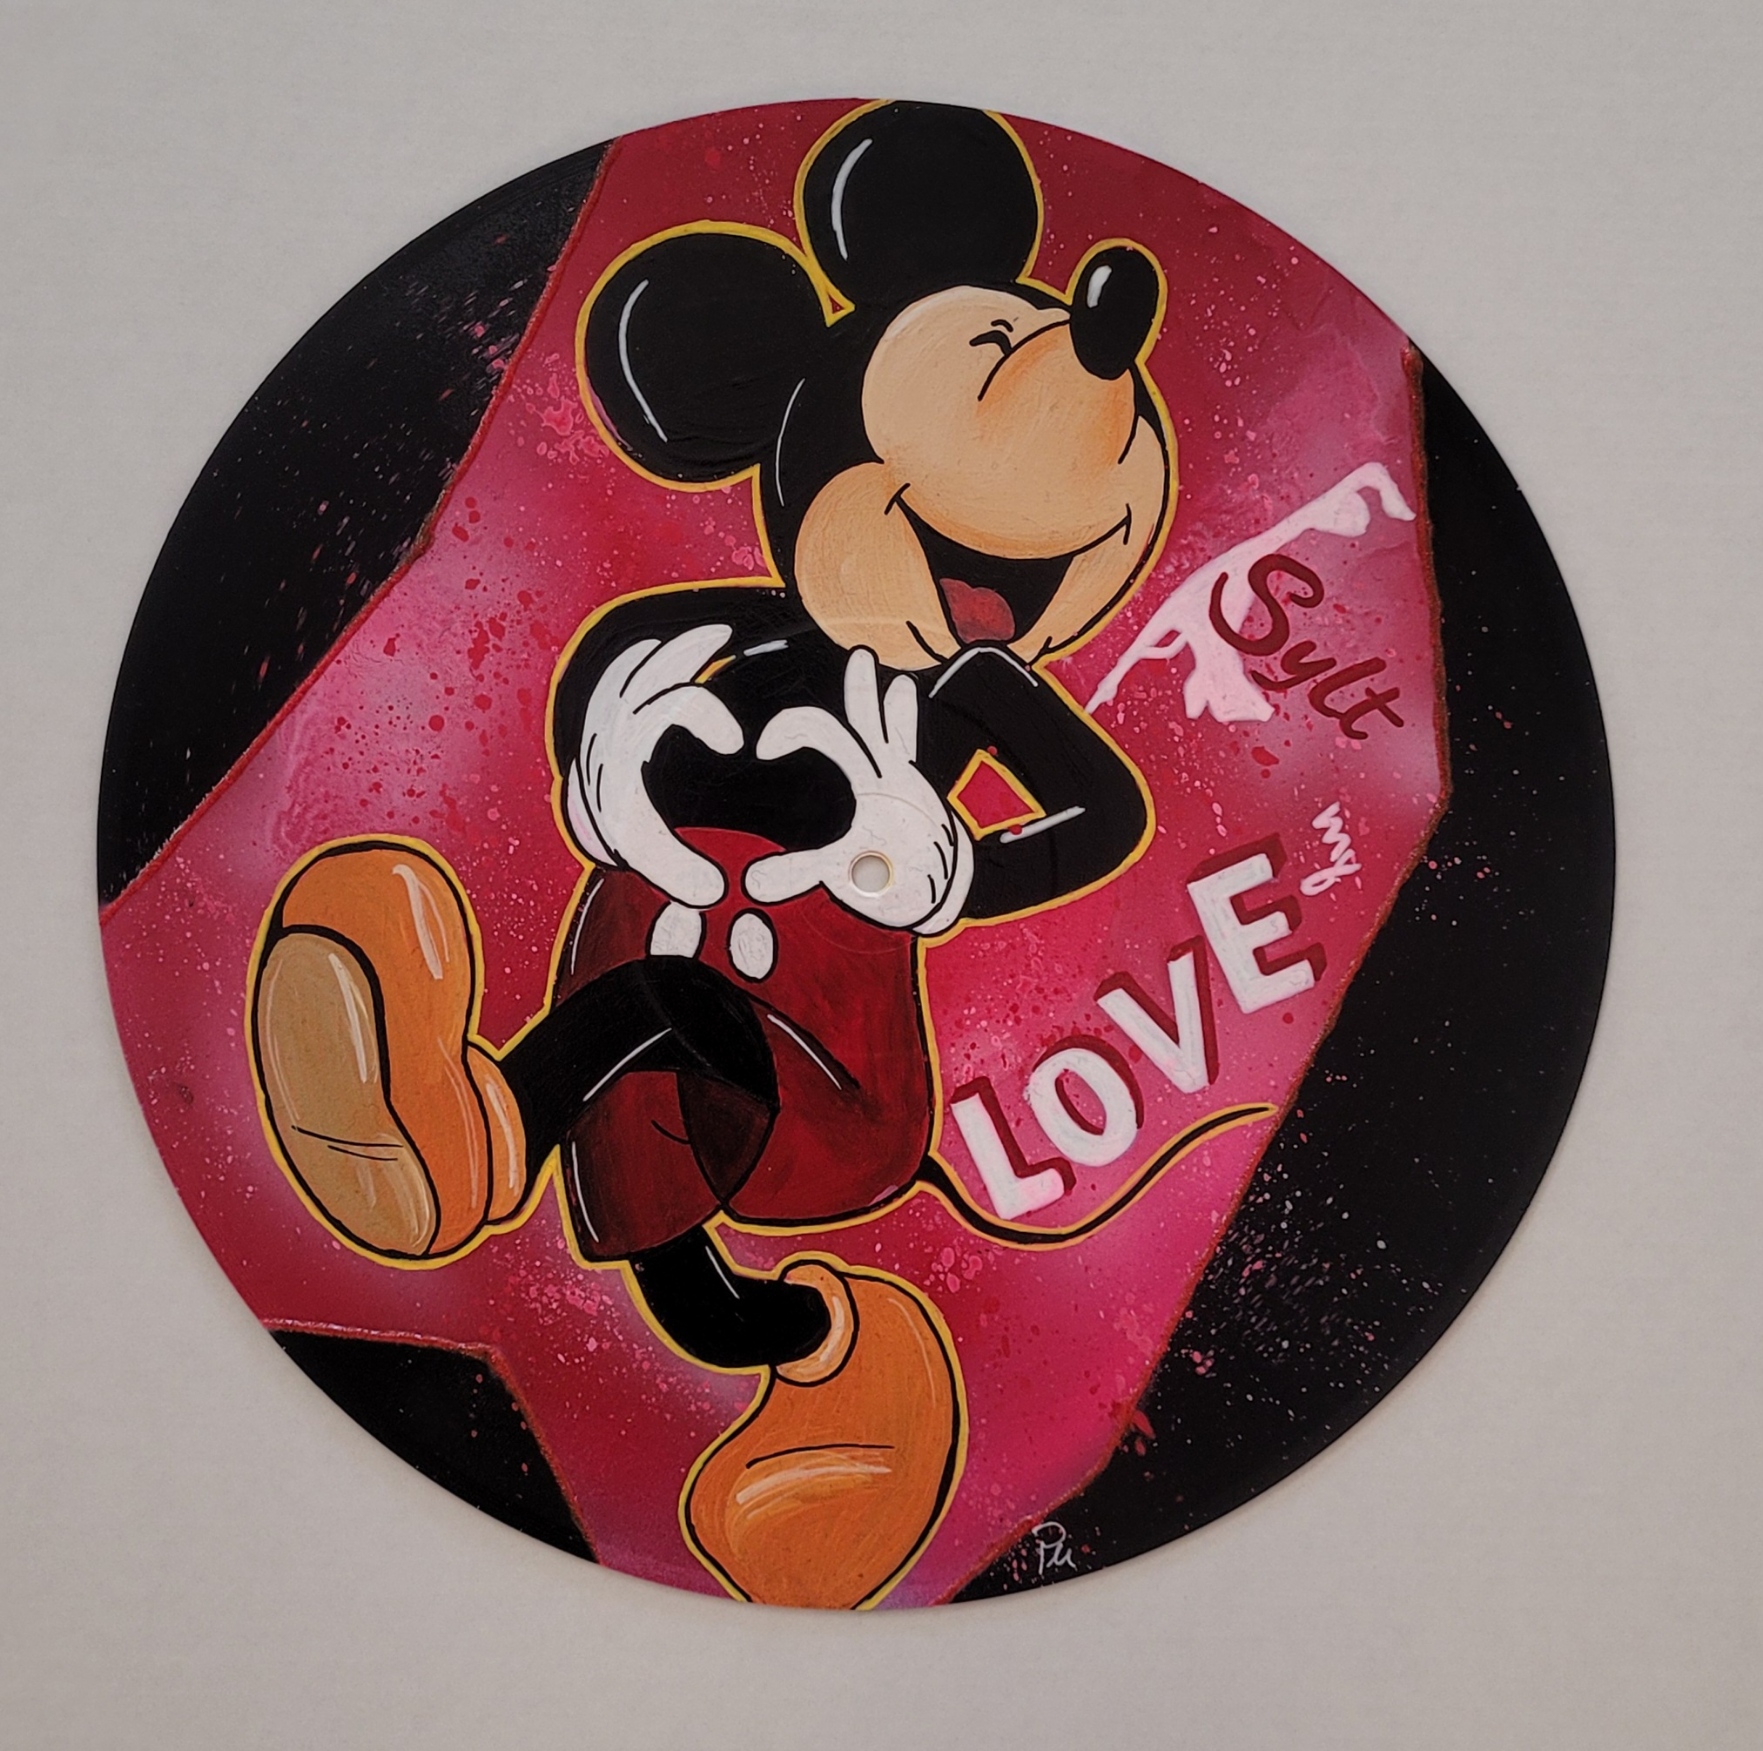 Mickey in Love